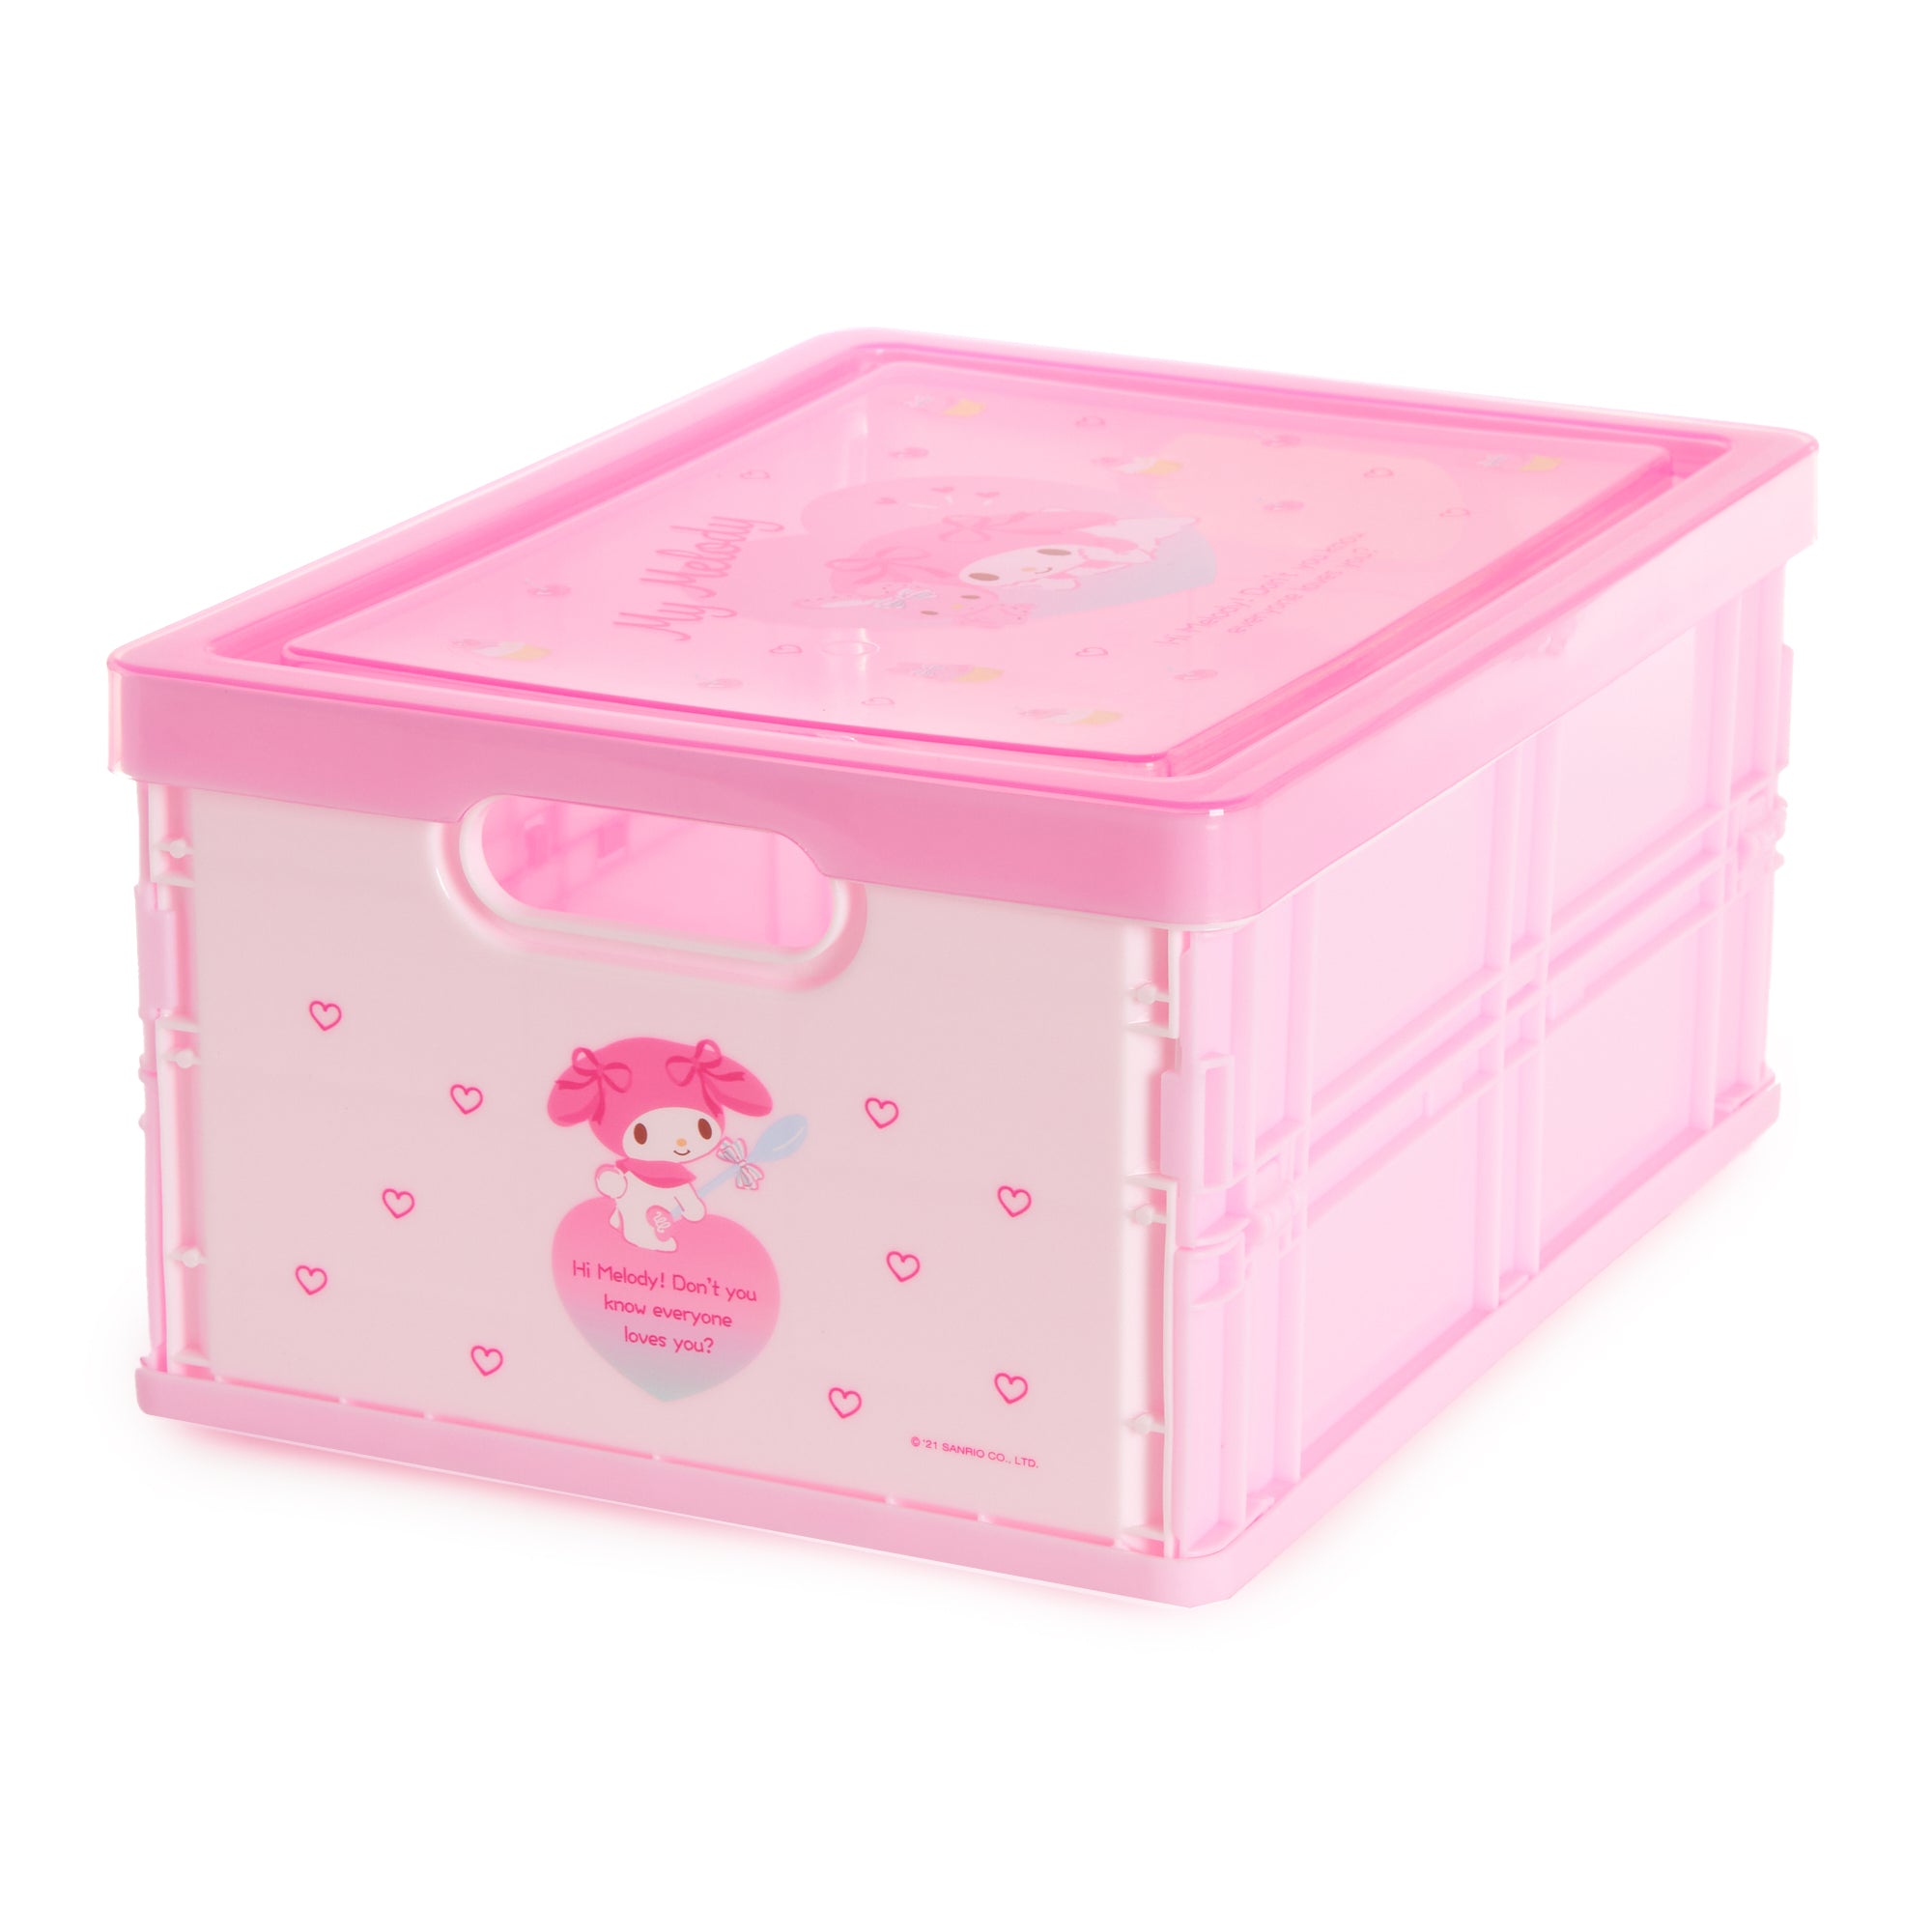 My Melody Stacking Storage Box (Small) Home Goods Japan Original   